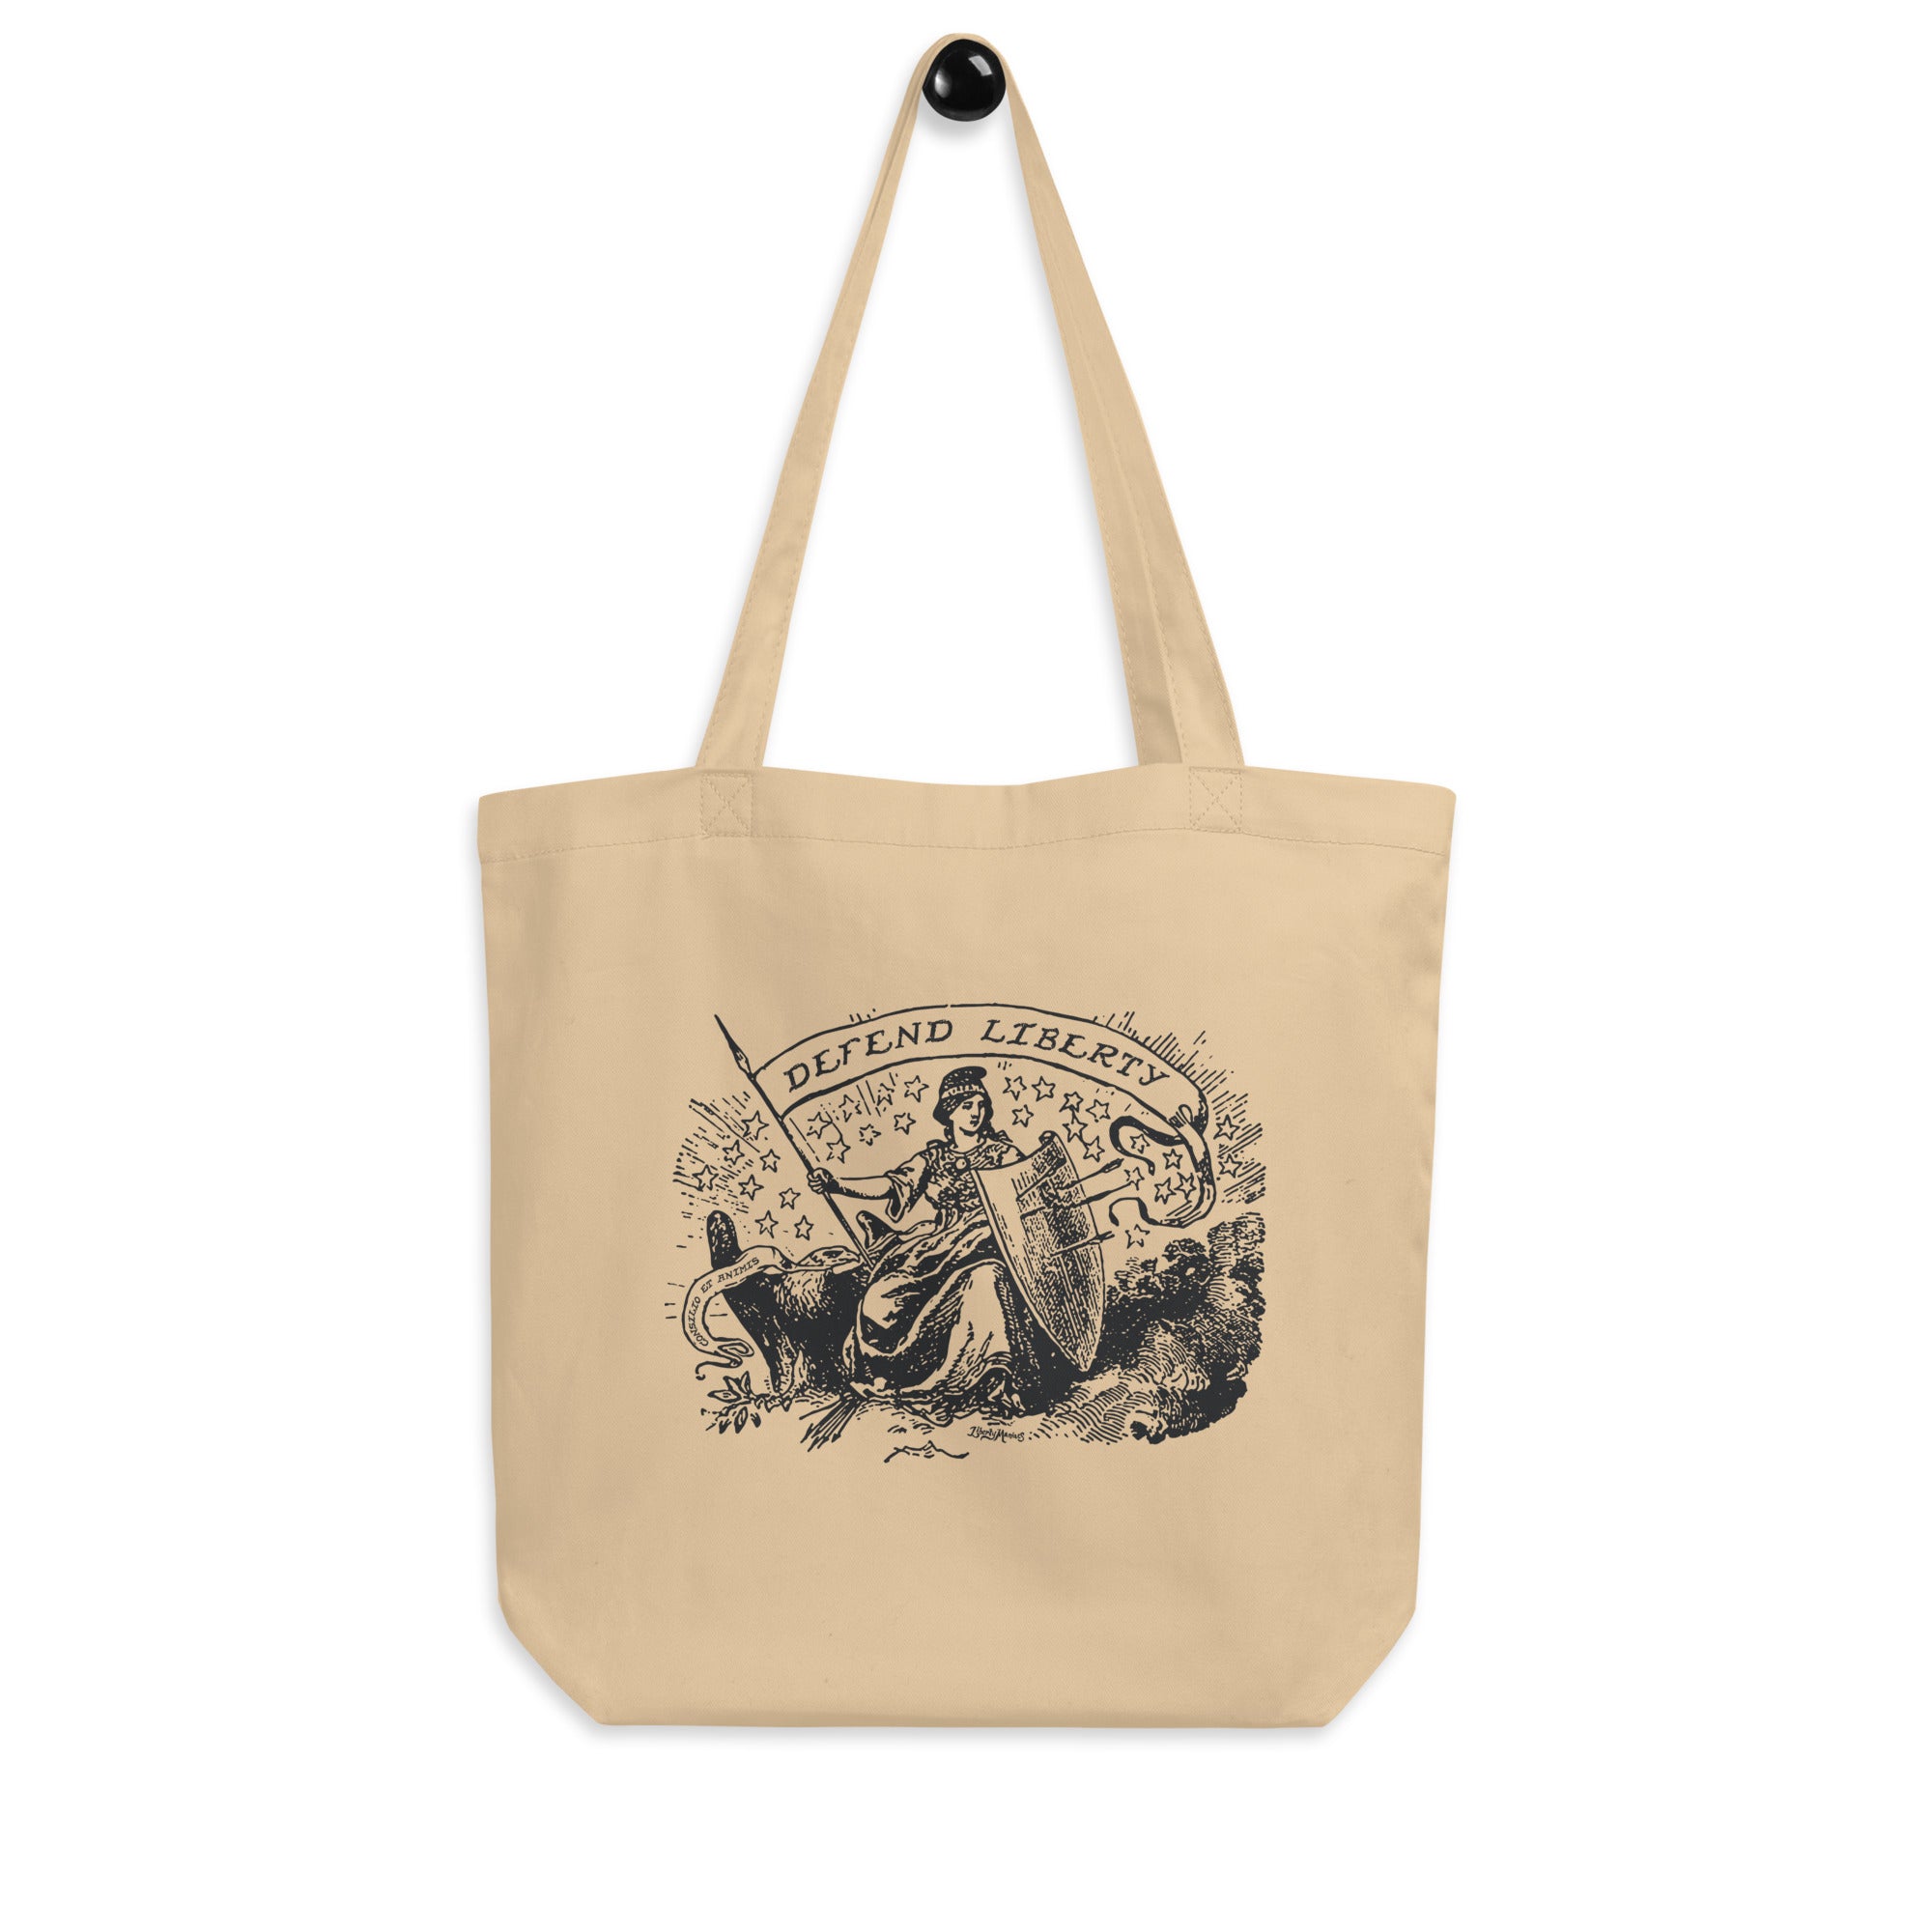 Defend Liberty Eco Tote Bag